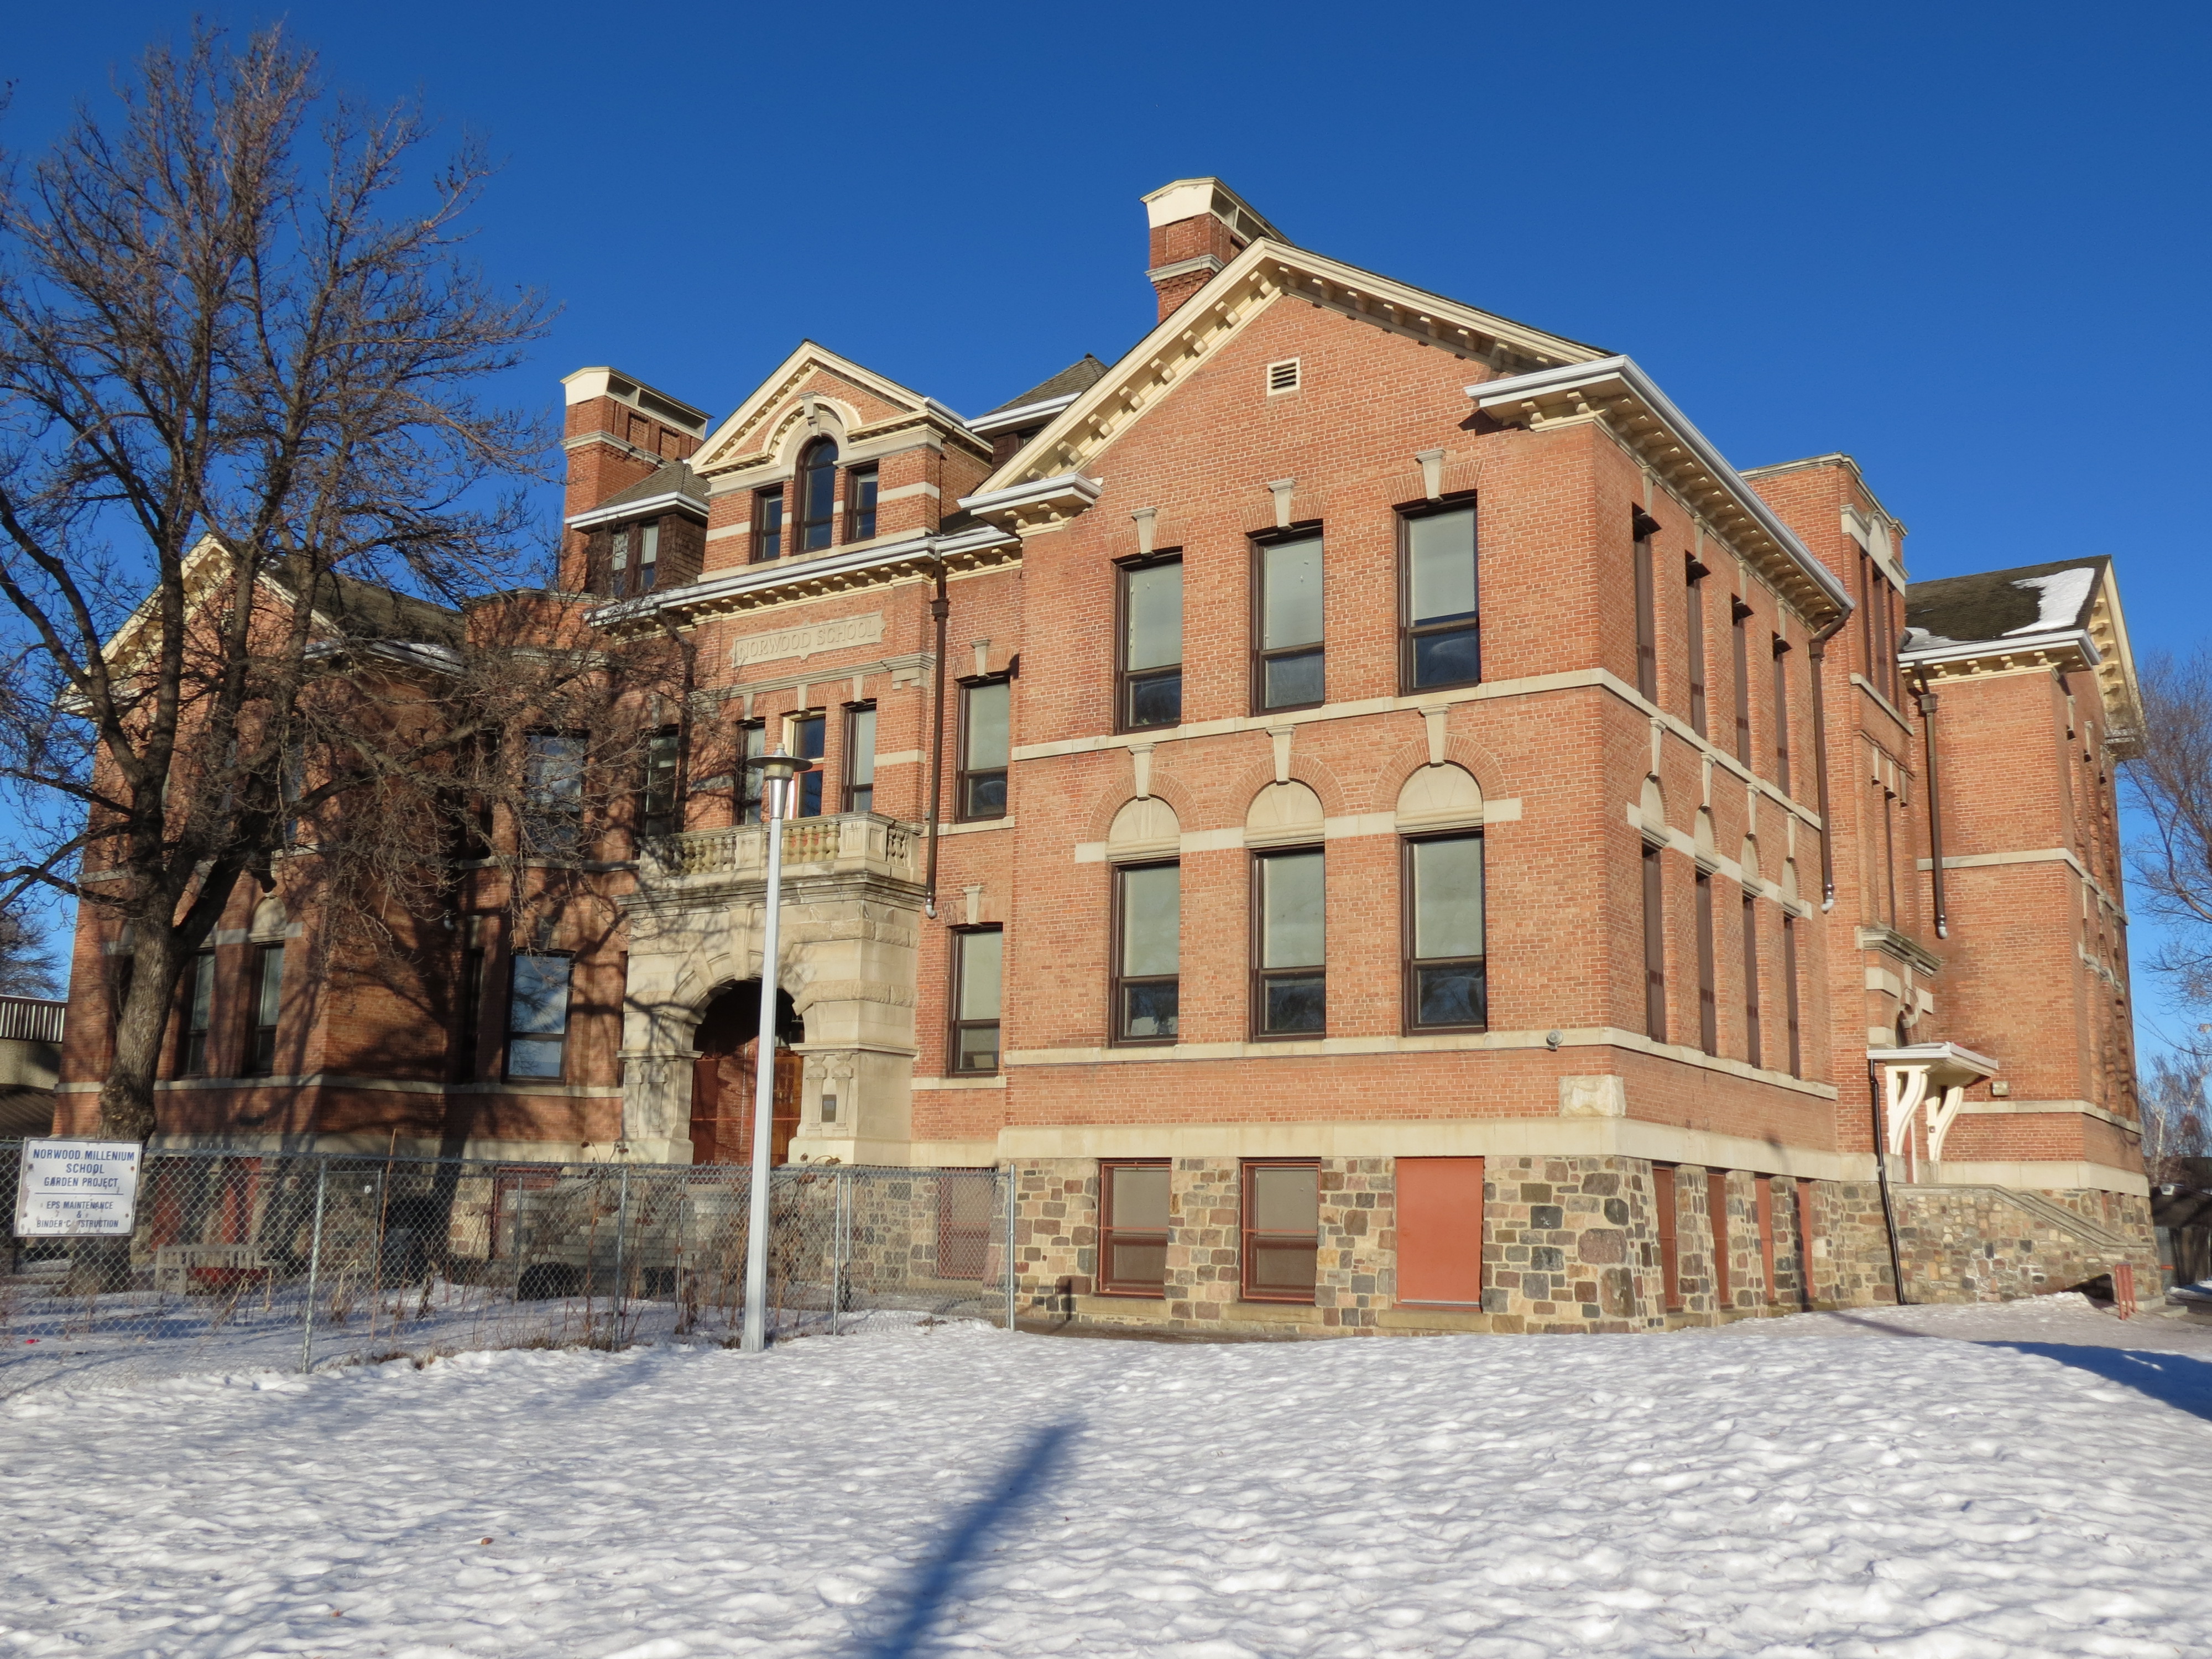 Edmonton Norwood School